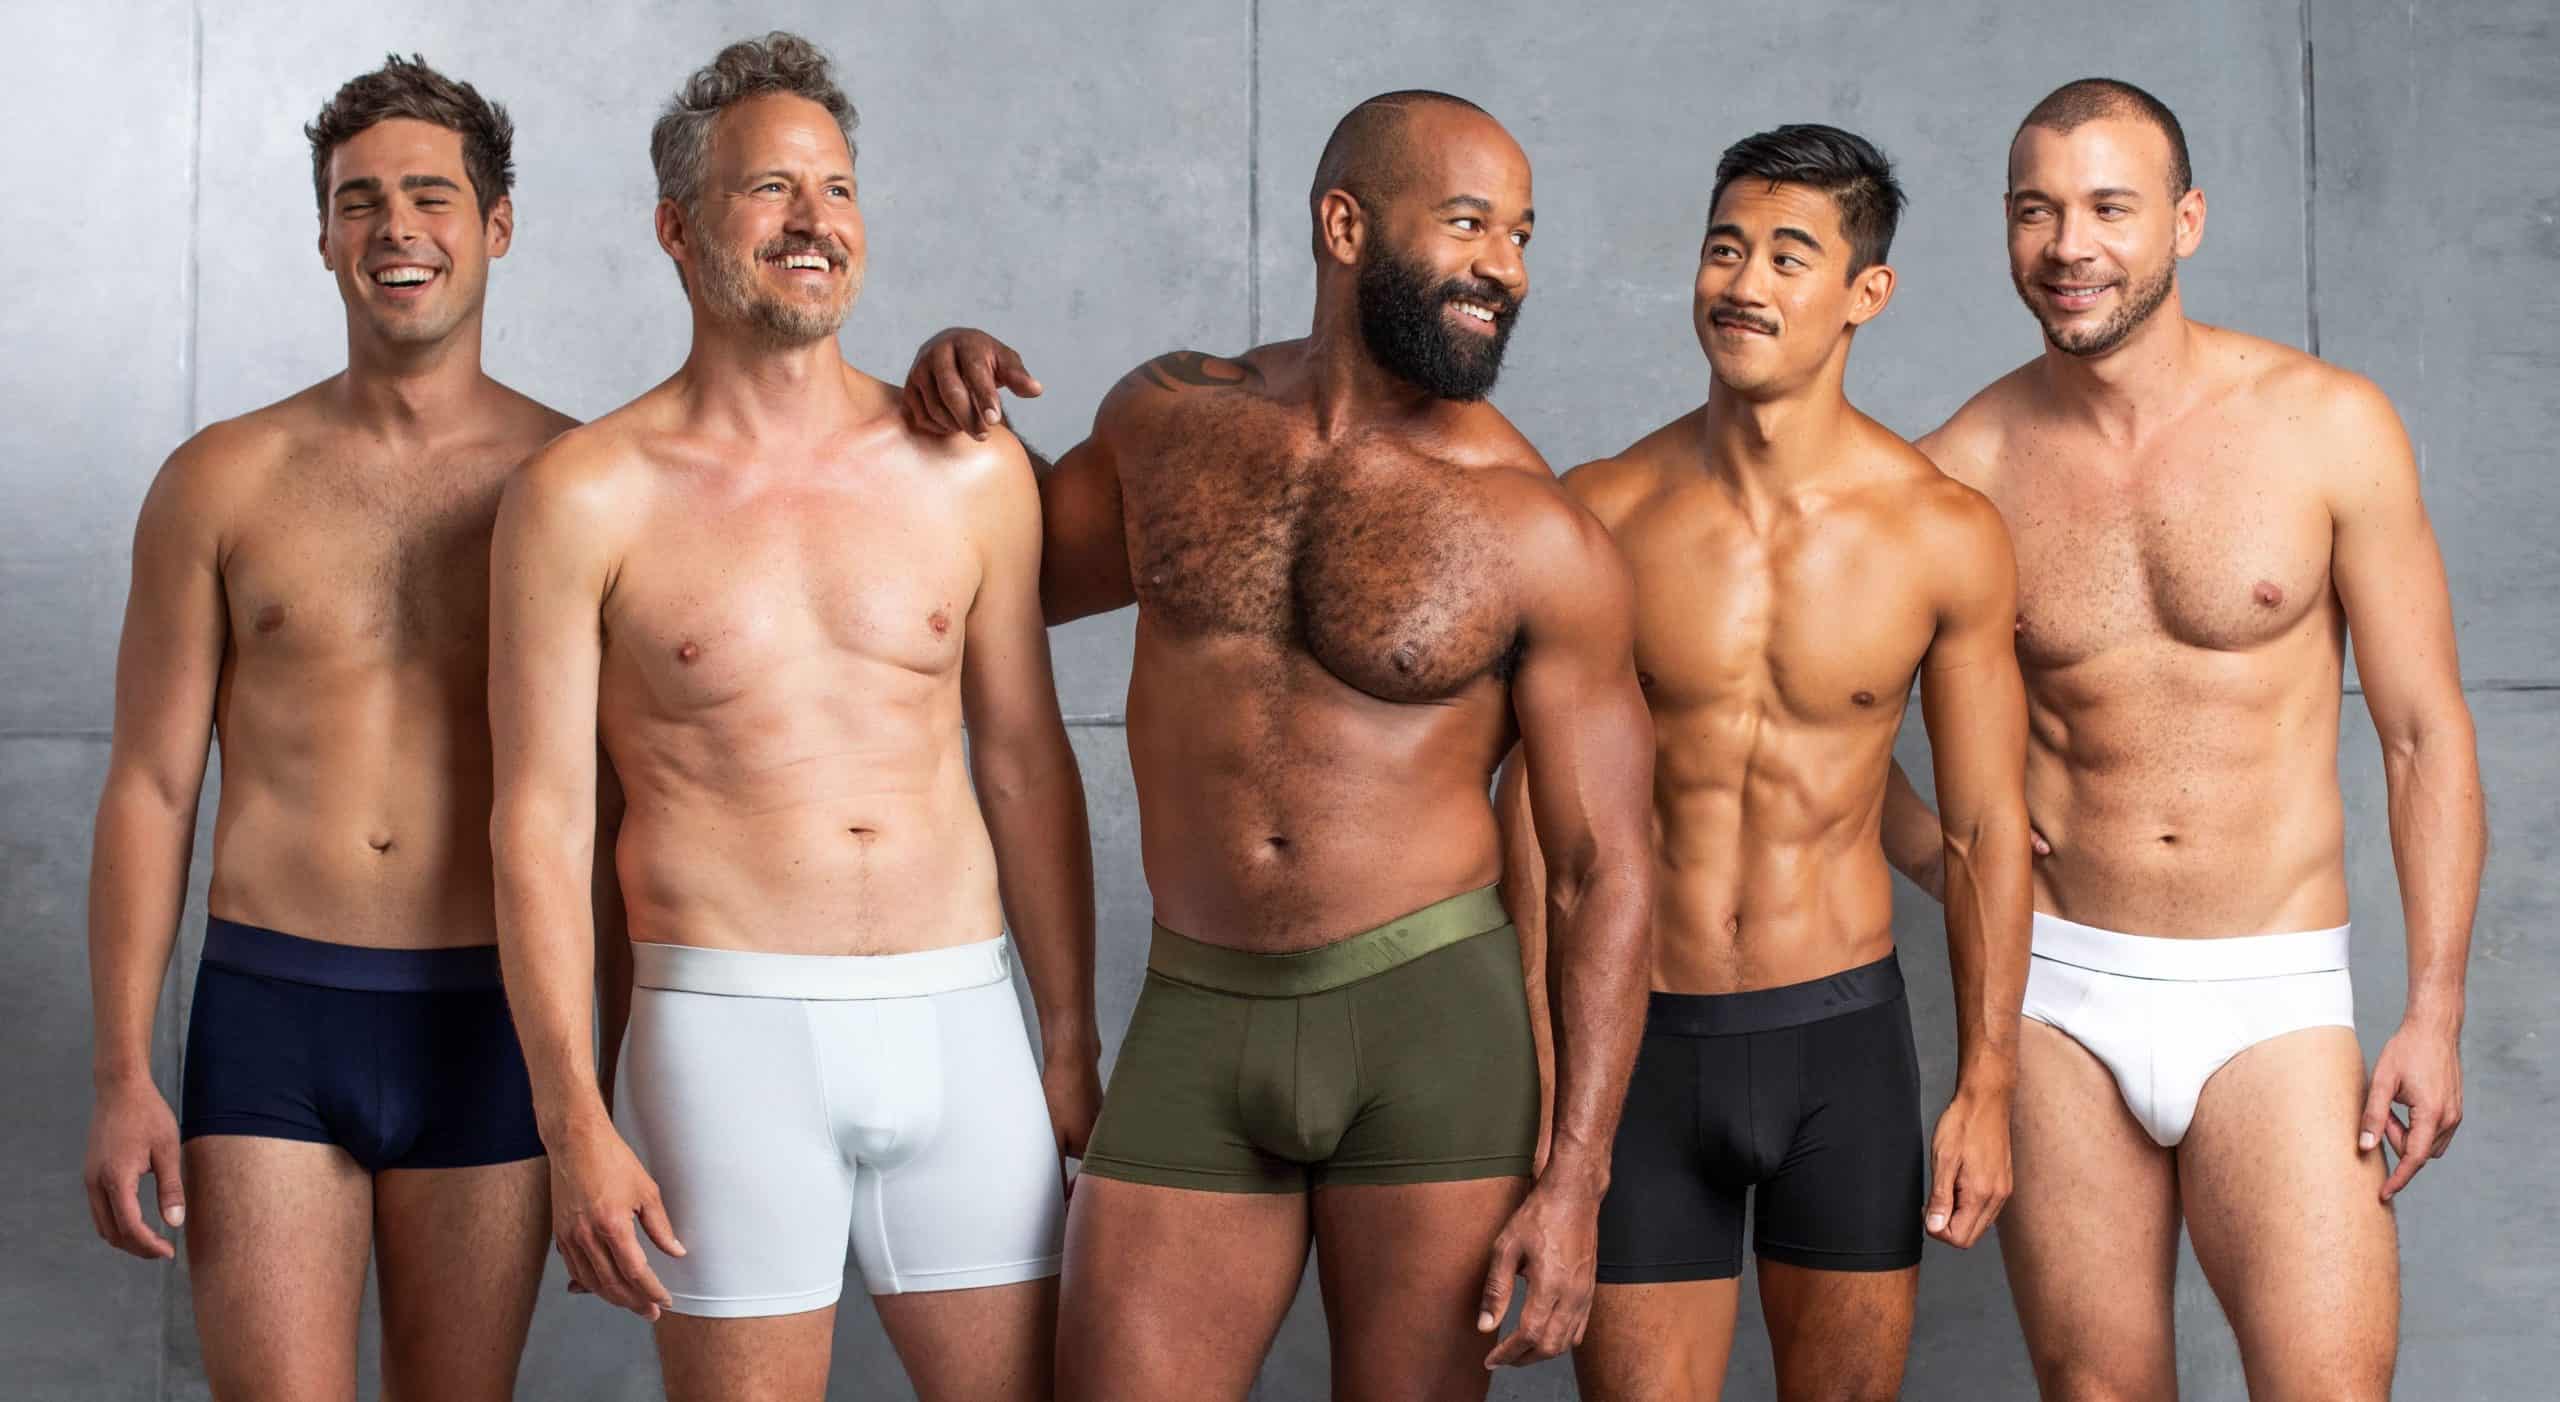 daniel a silva recommends pics of guys in underwear pic